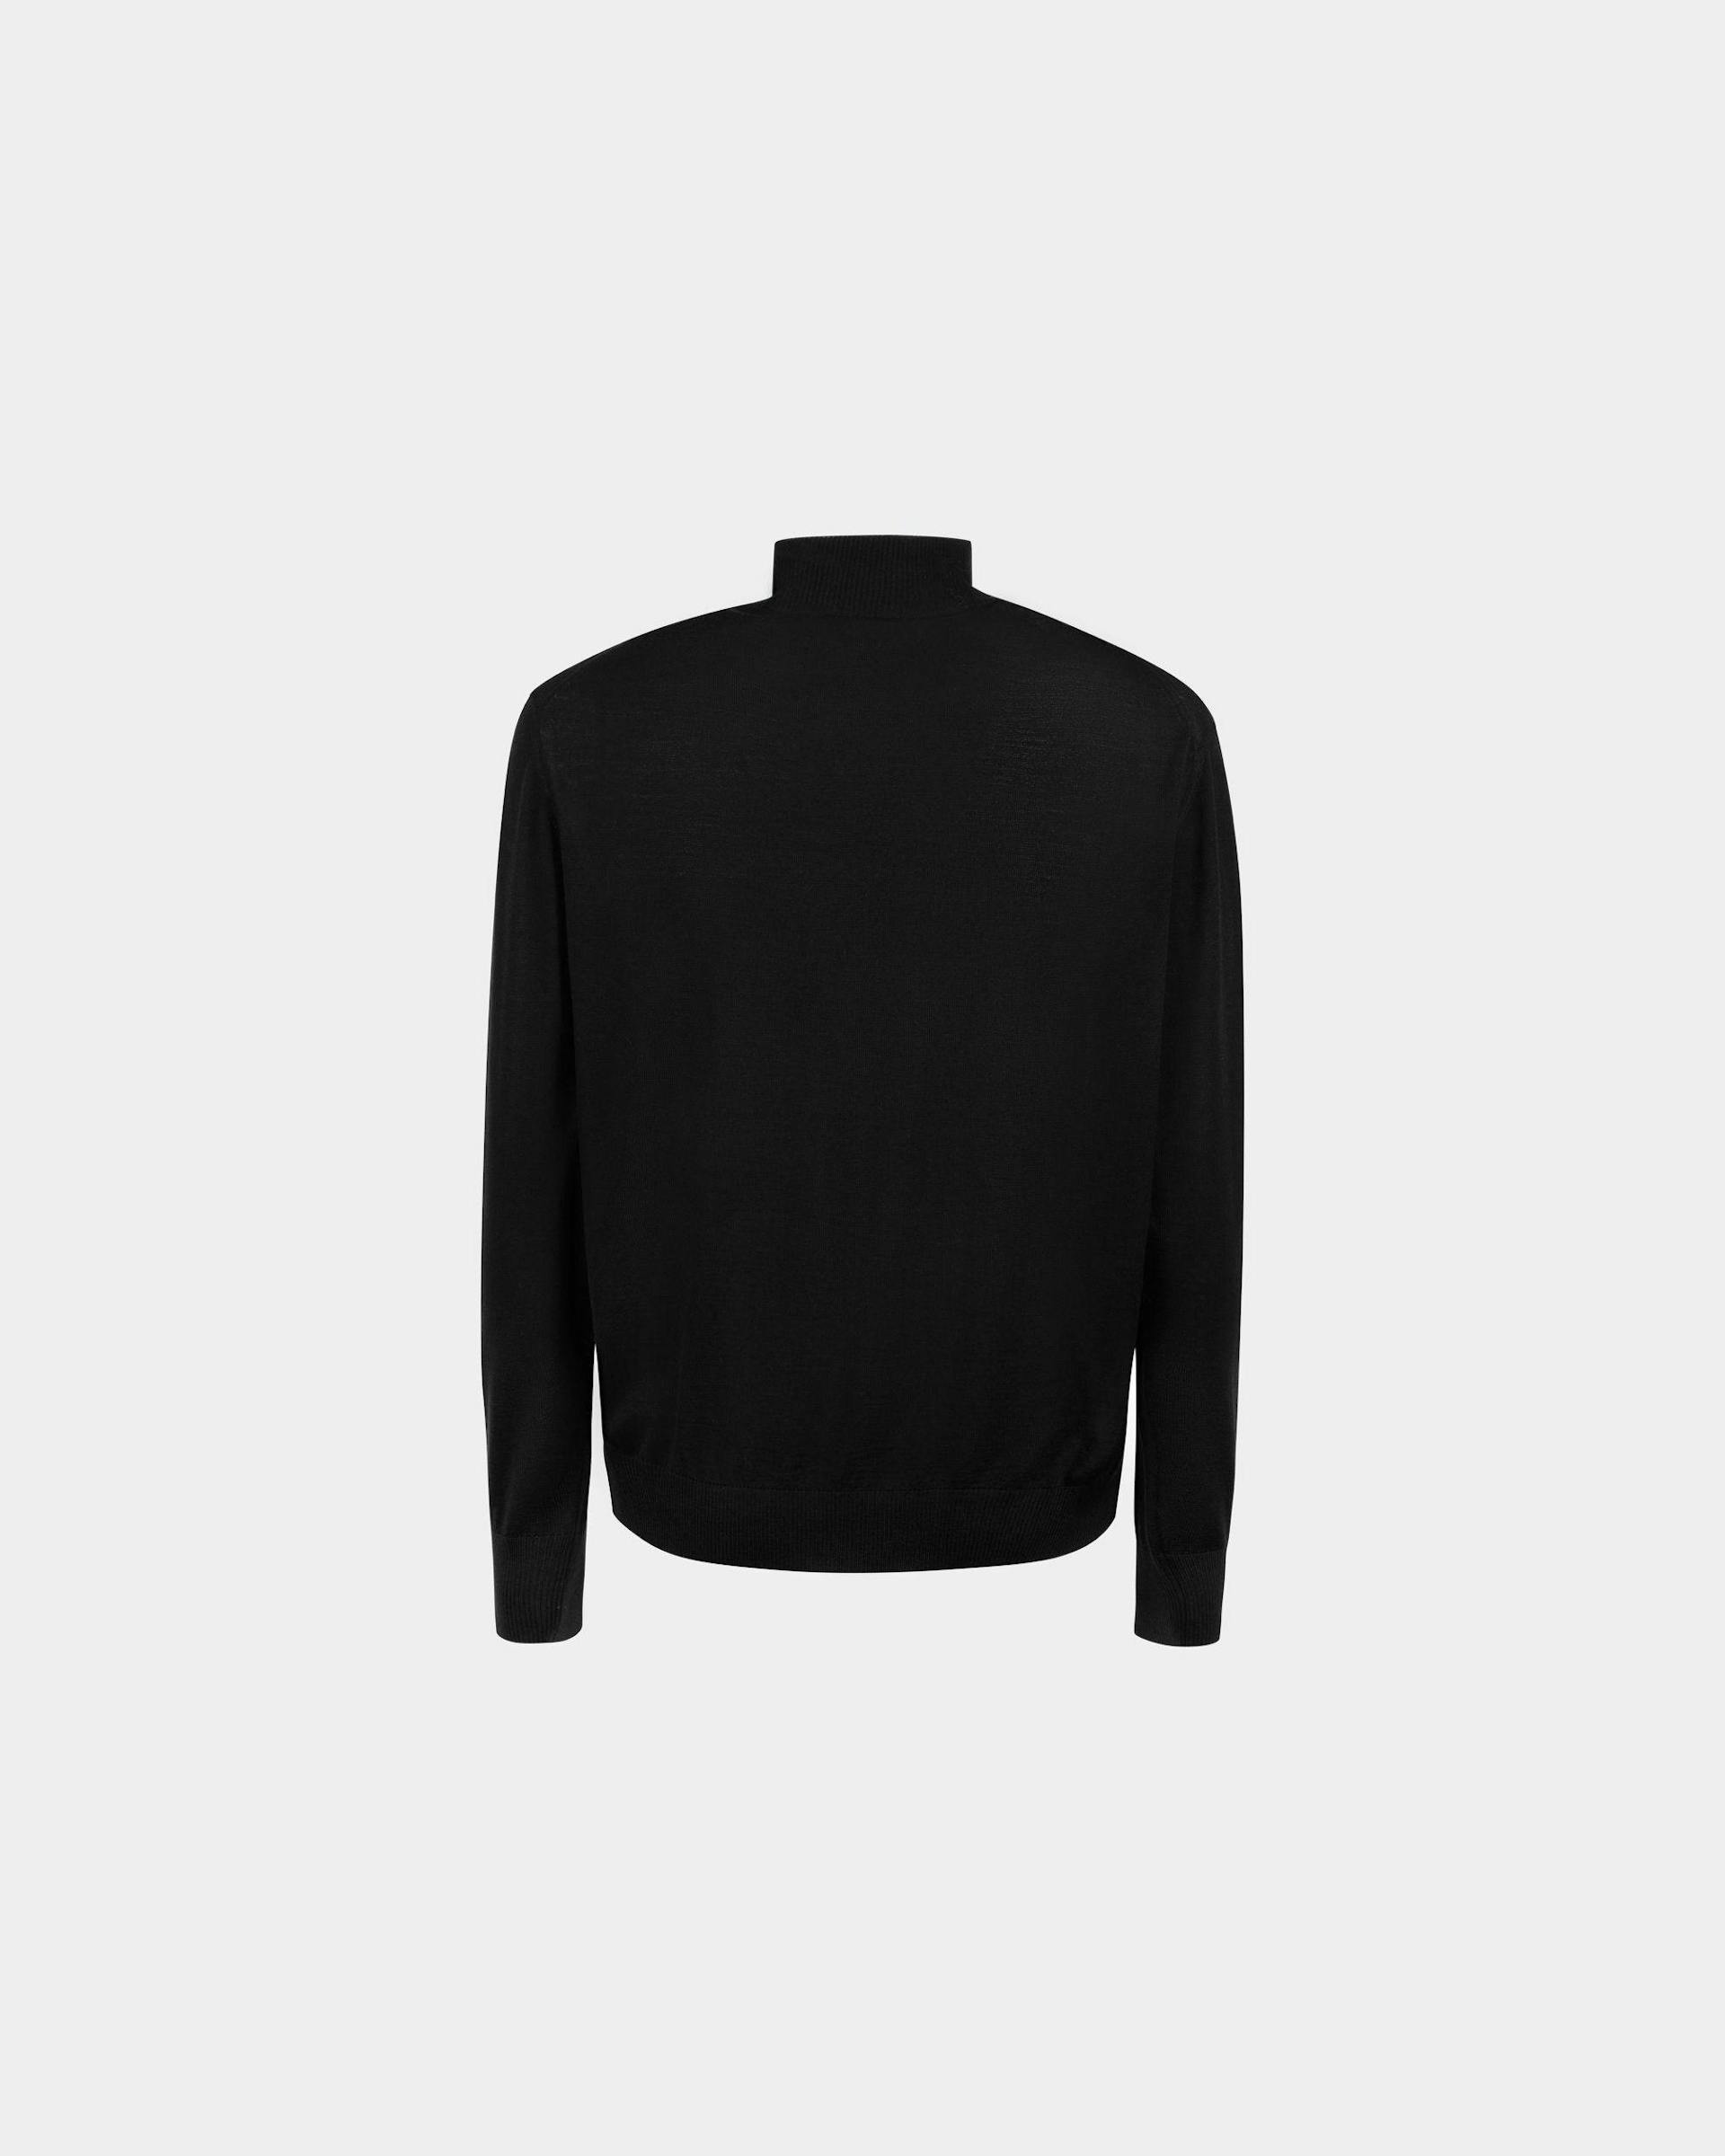 Men's Roll Neck Sweater in Black Wool | Bally | Still Life Back